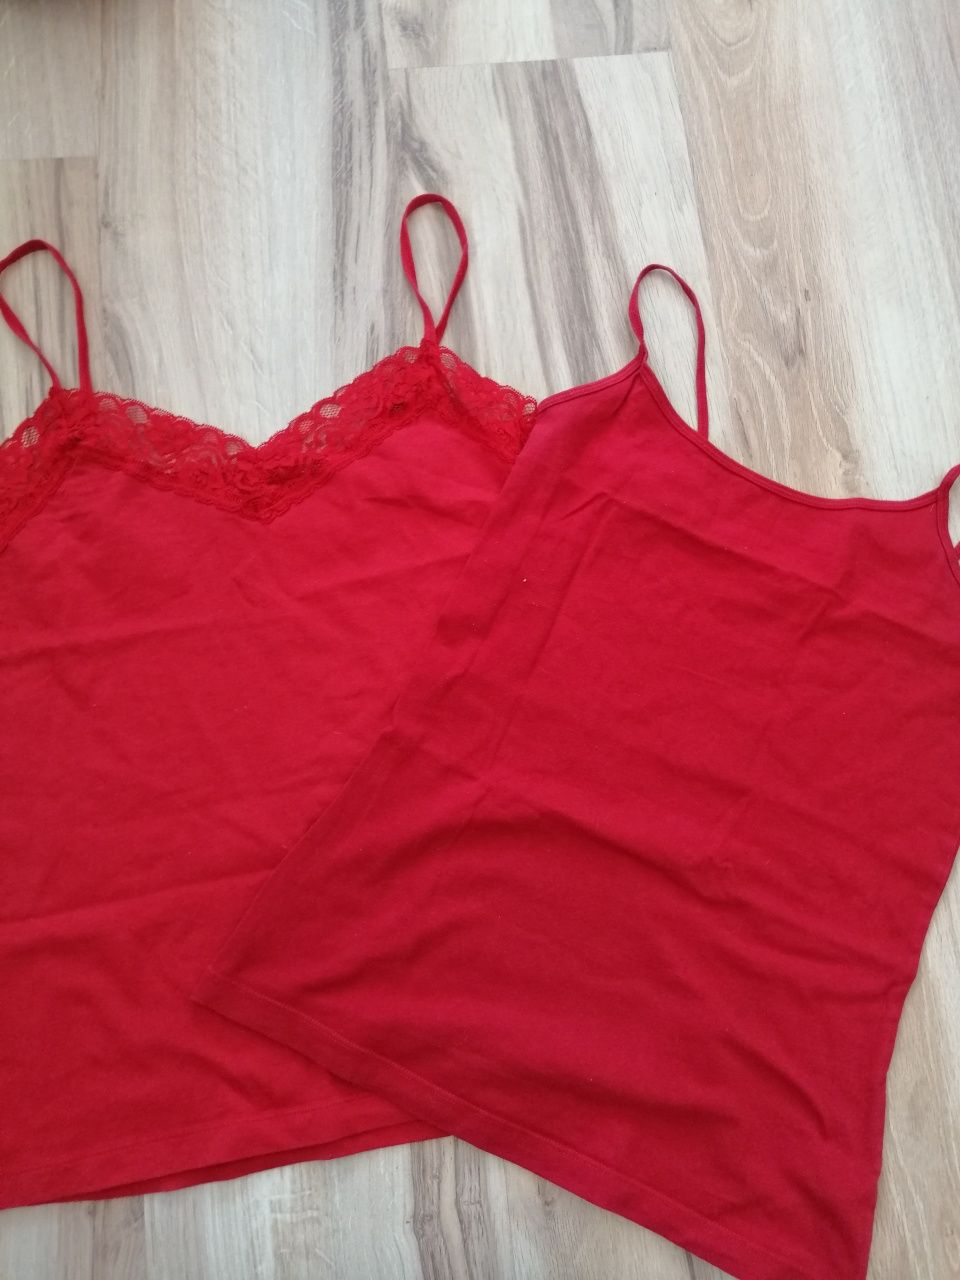 2 czerwone topy koszulki na naramkach Esmara S/M